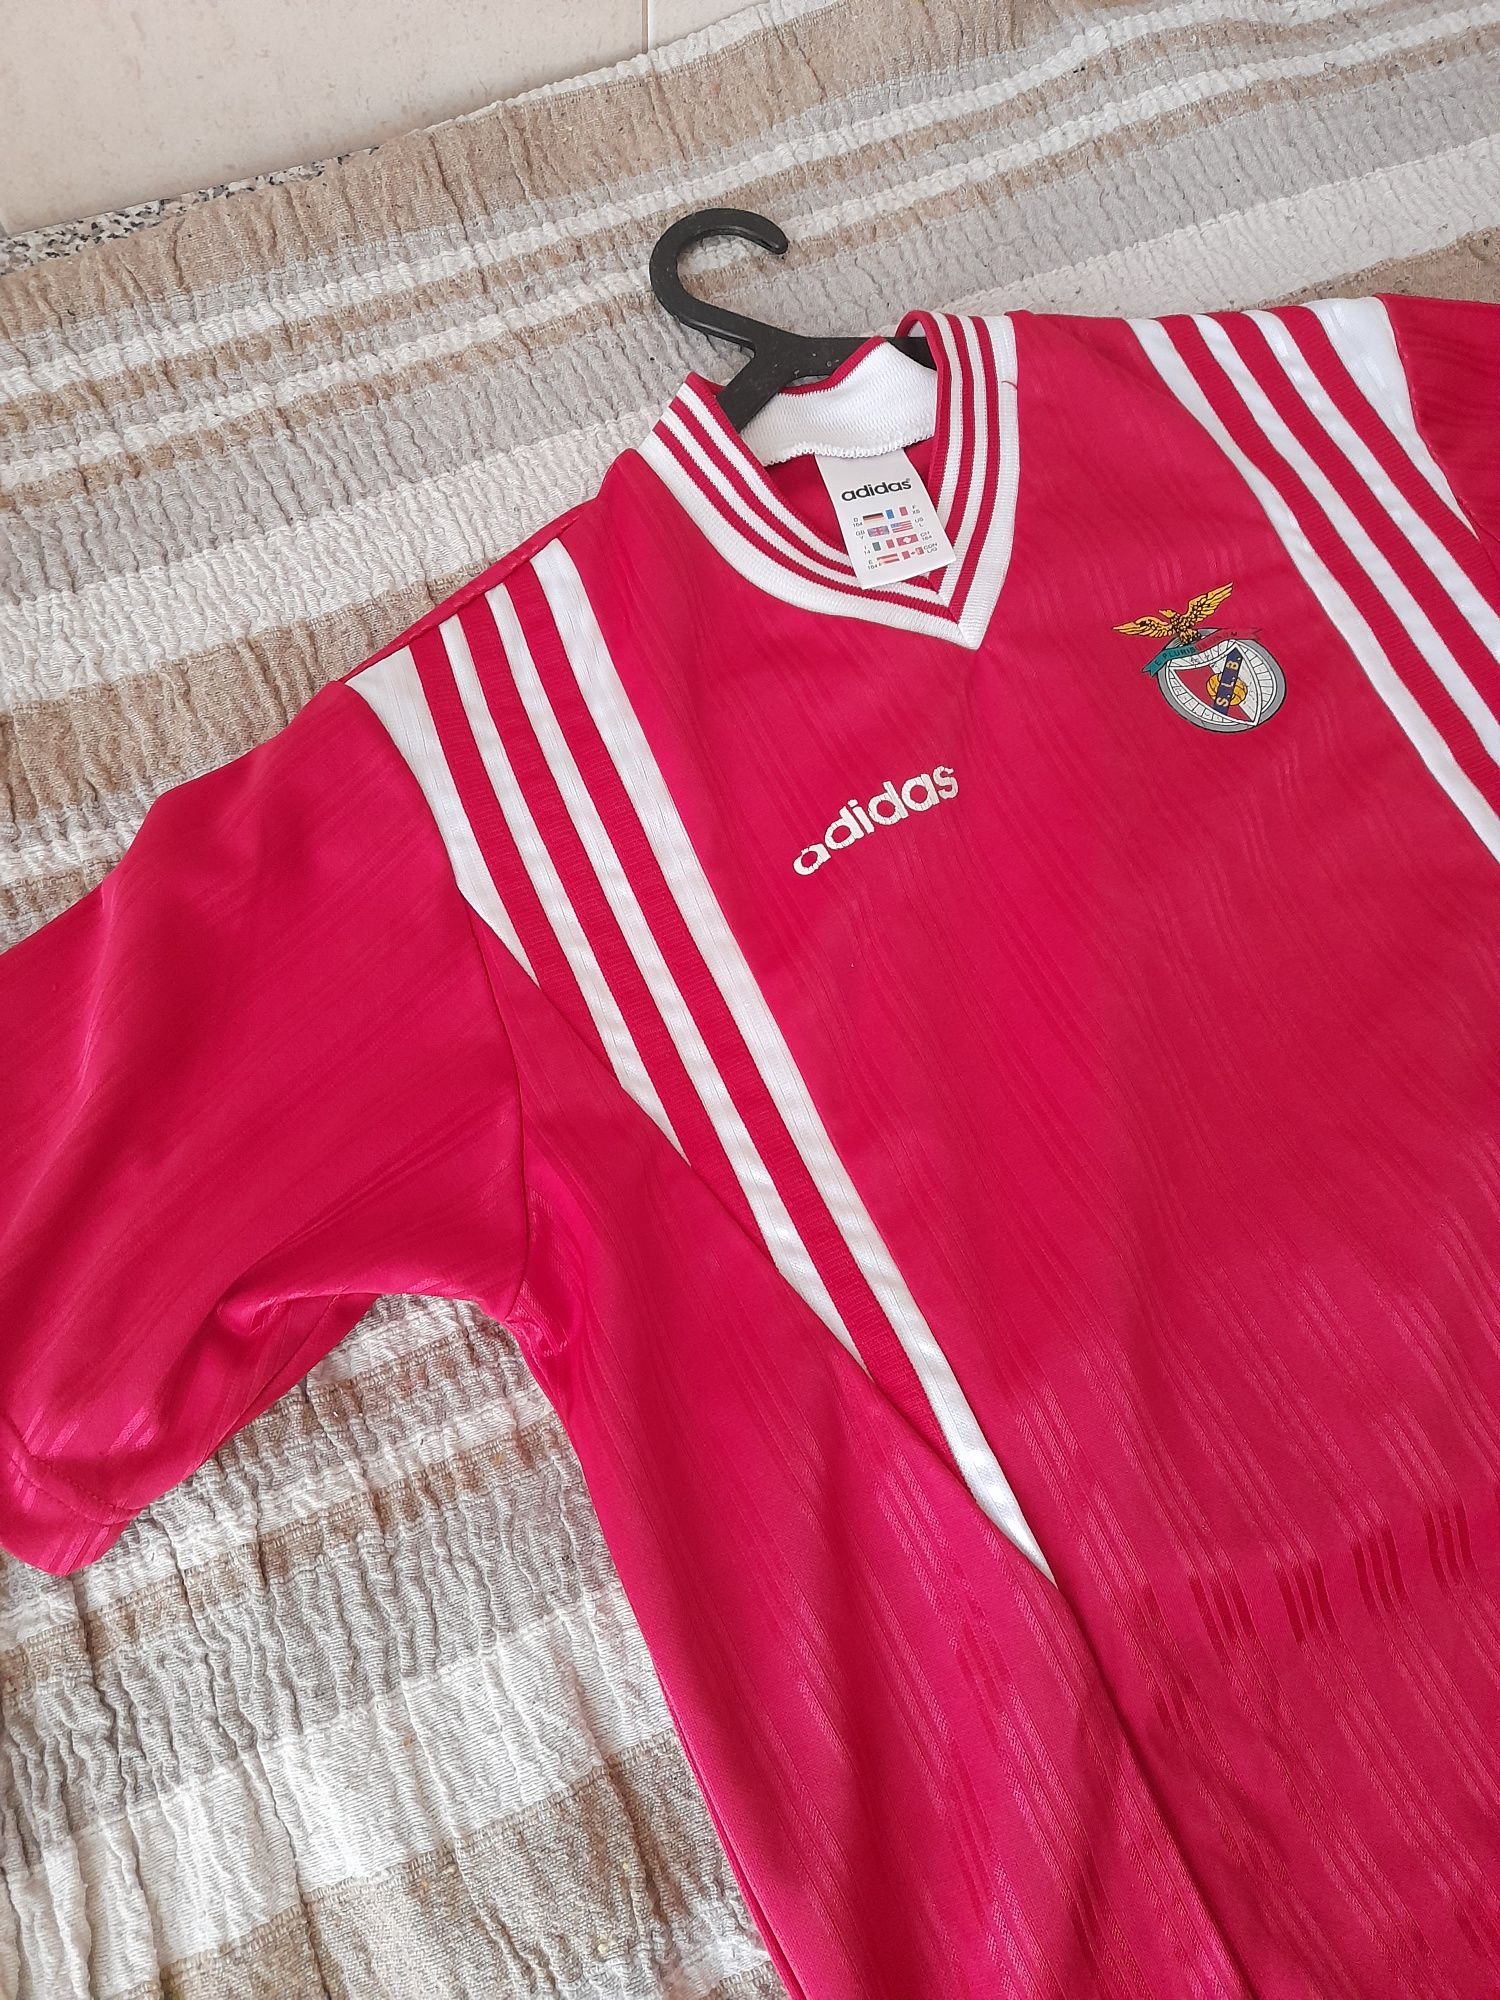 Camisola Benfica 1997